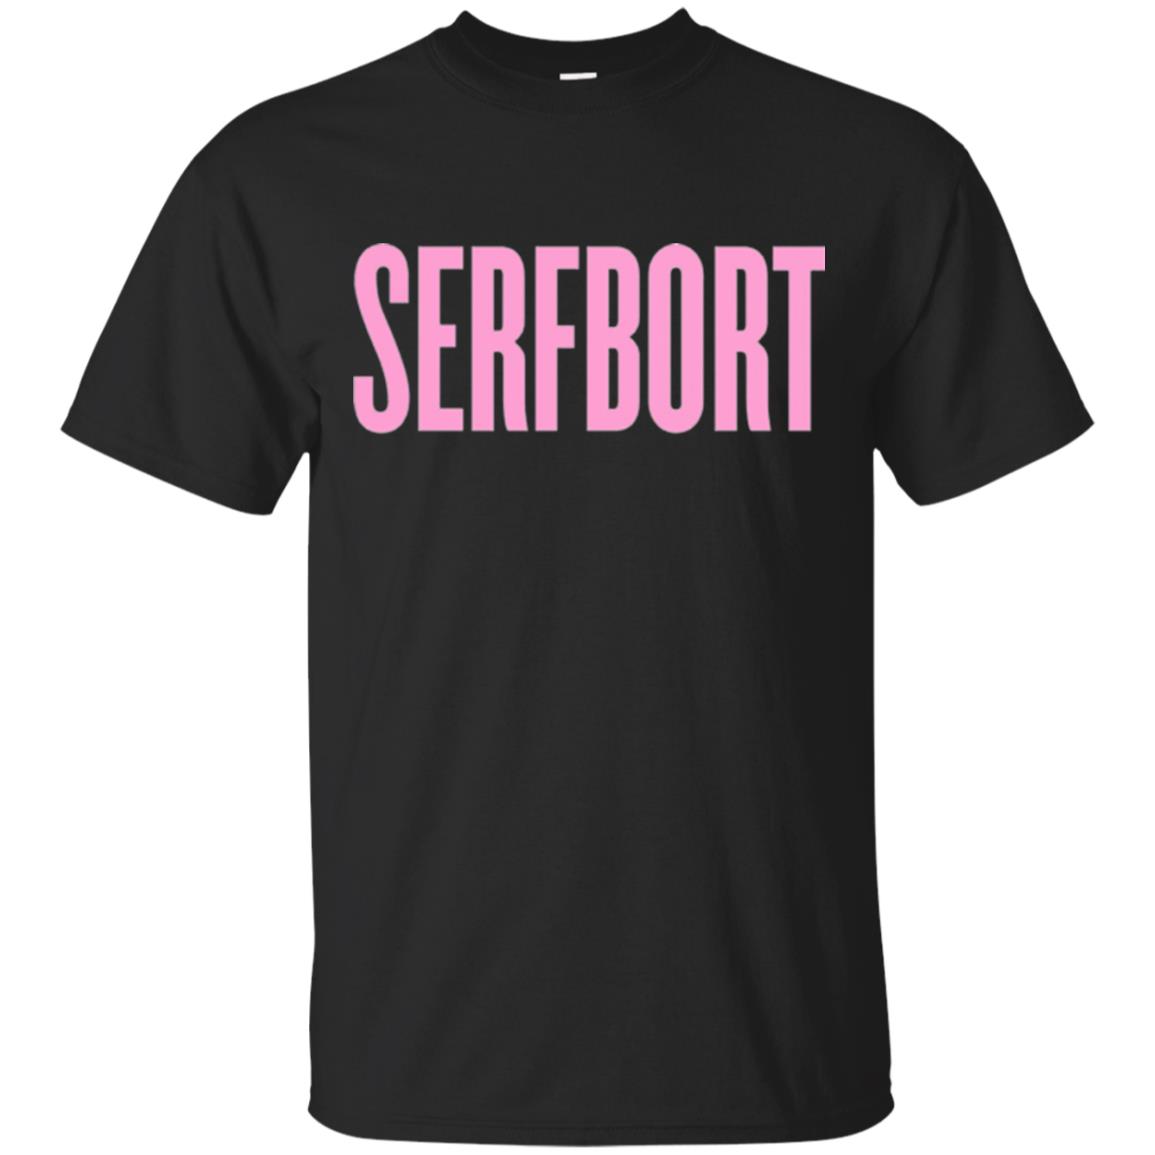 serfbort shirt - black